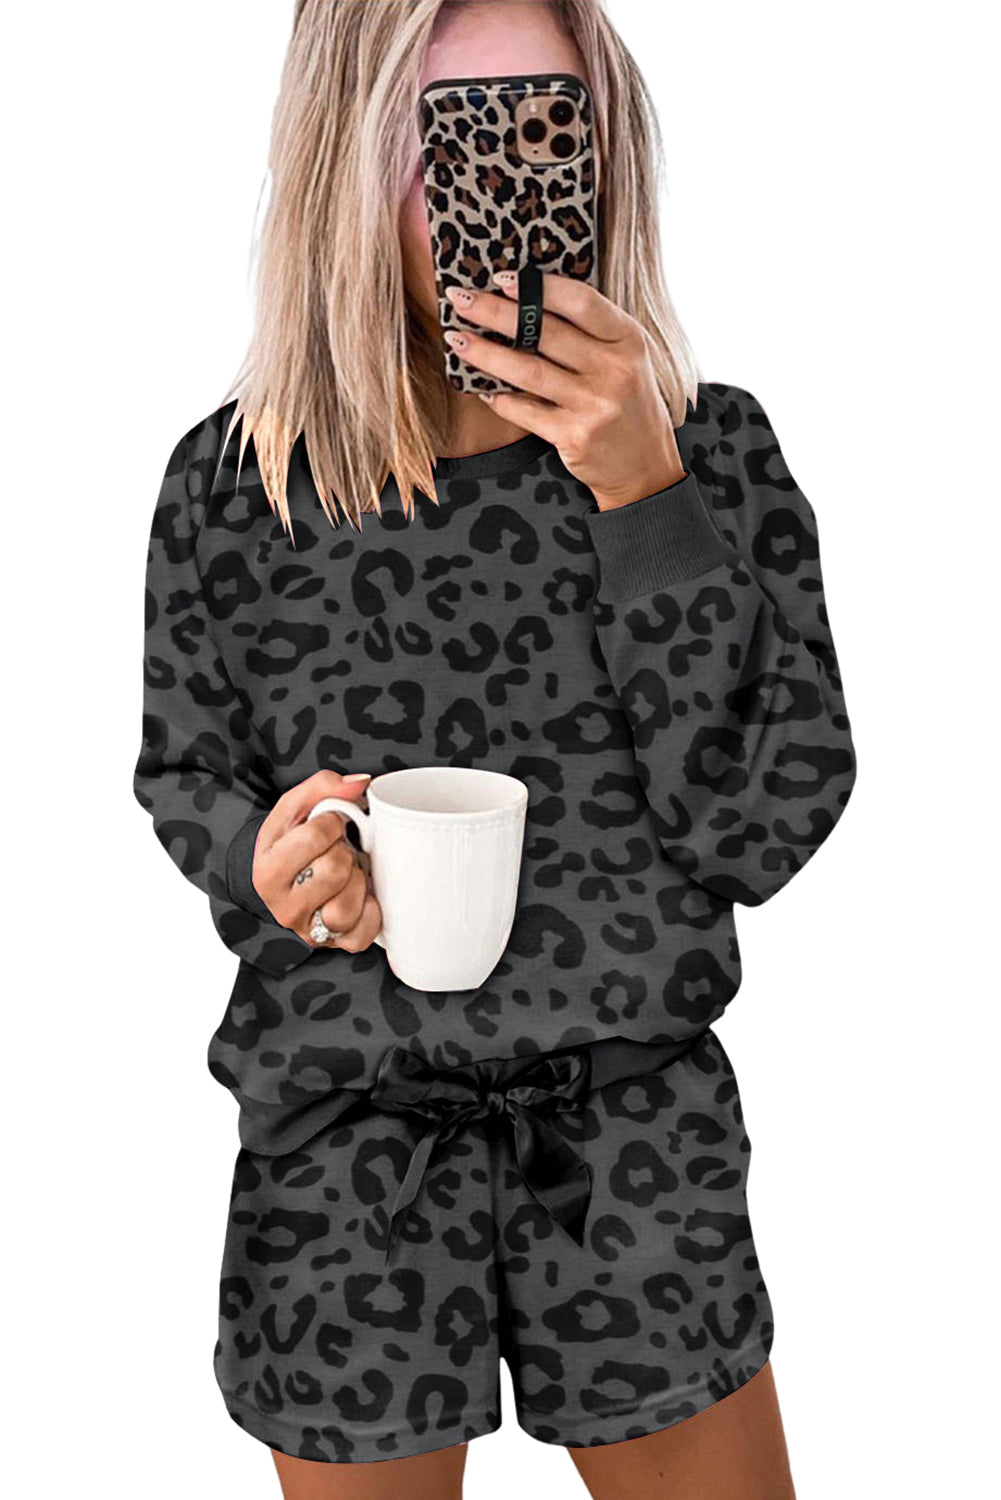 Gray Printed Leopard Long Sleeve Satin Tie Shorts Two Piece Set Loungewear JT's Designer Fashion